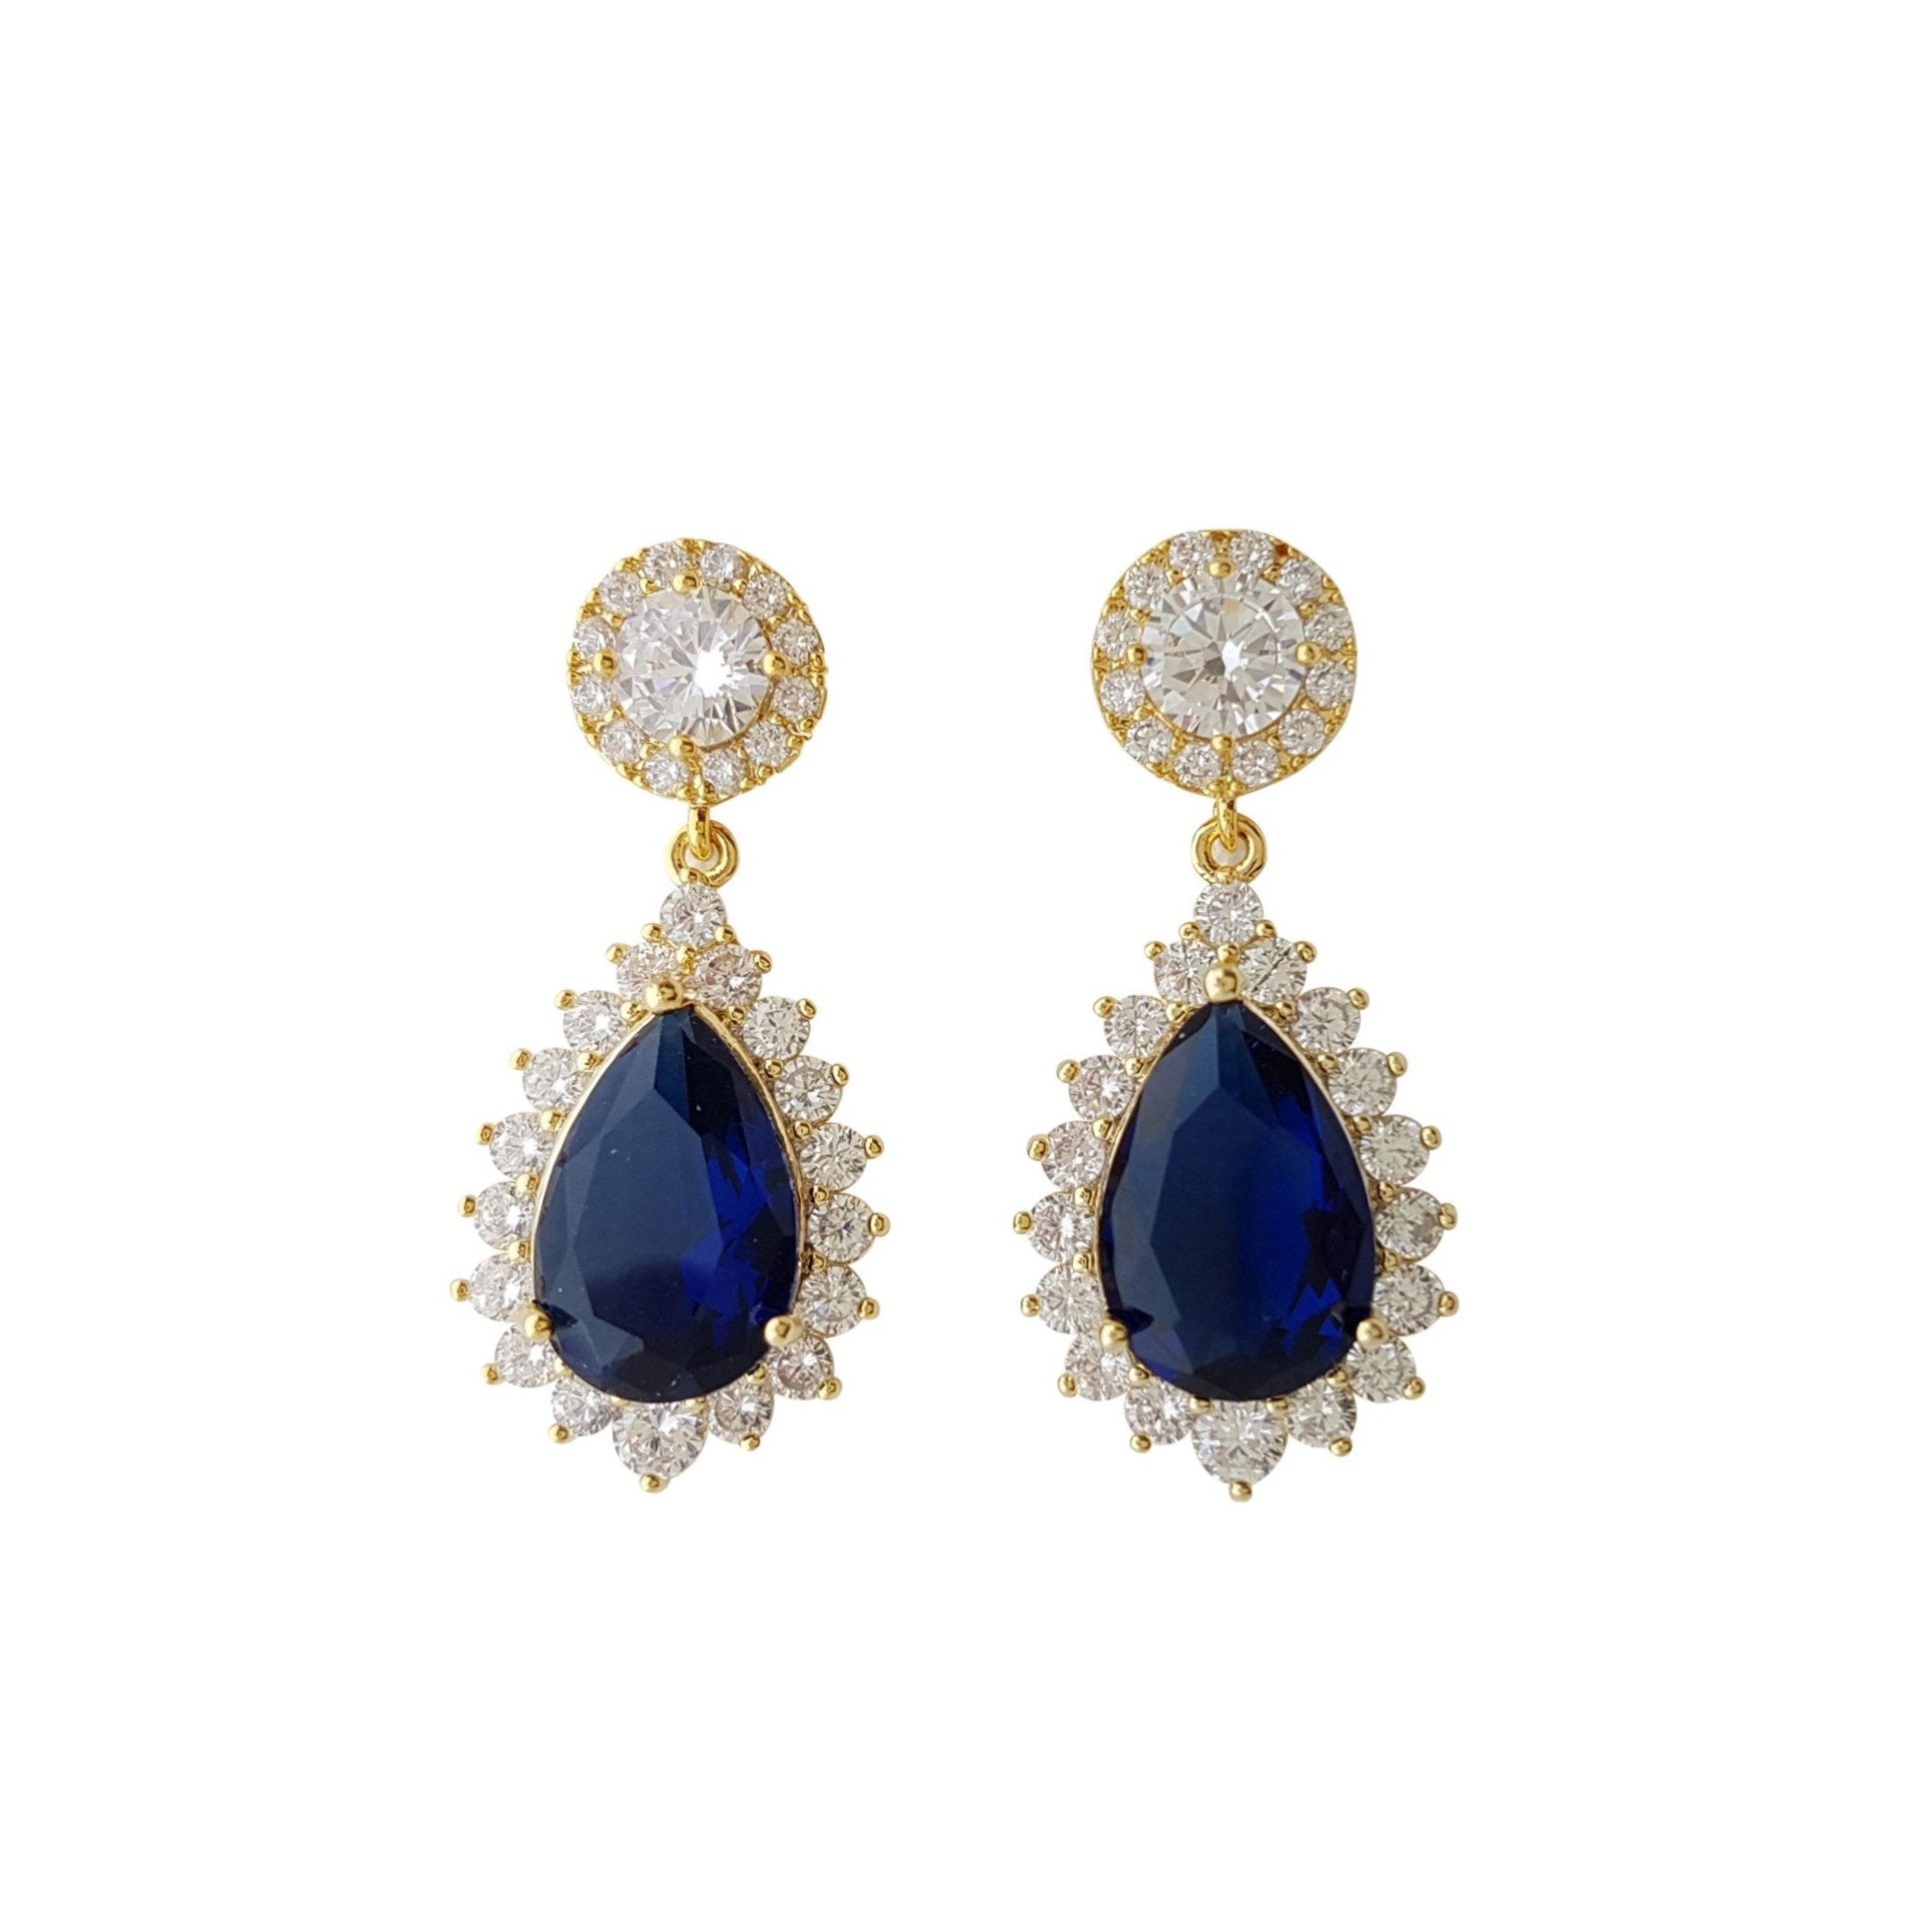 Gold Earrings in Cubic Zirconia blue stone for weddings- Poetry Designs